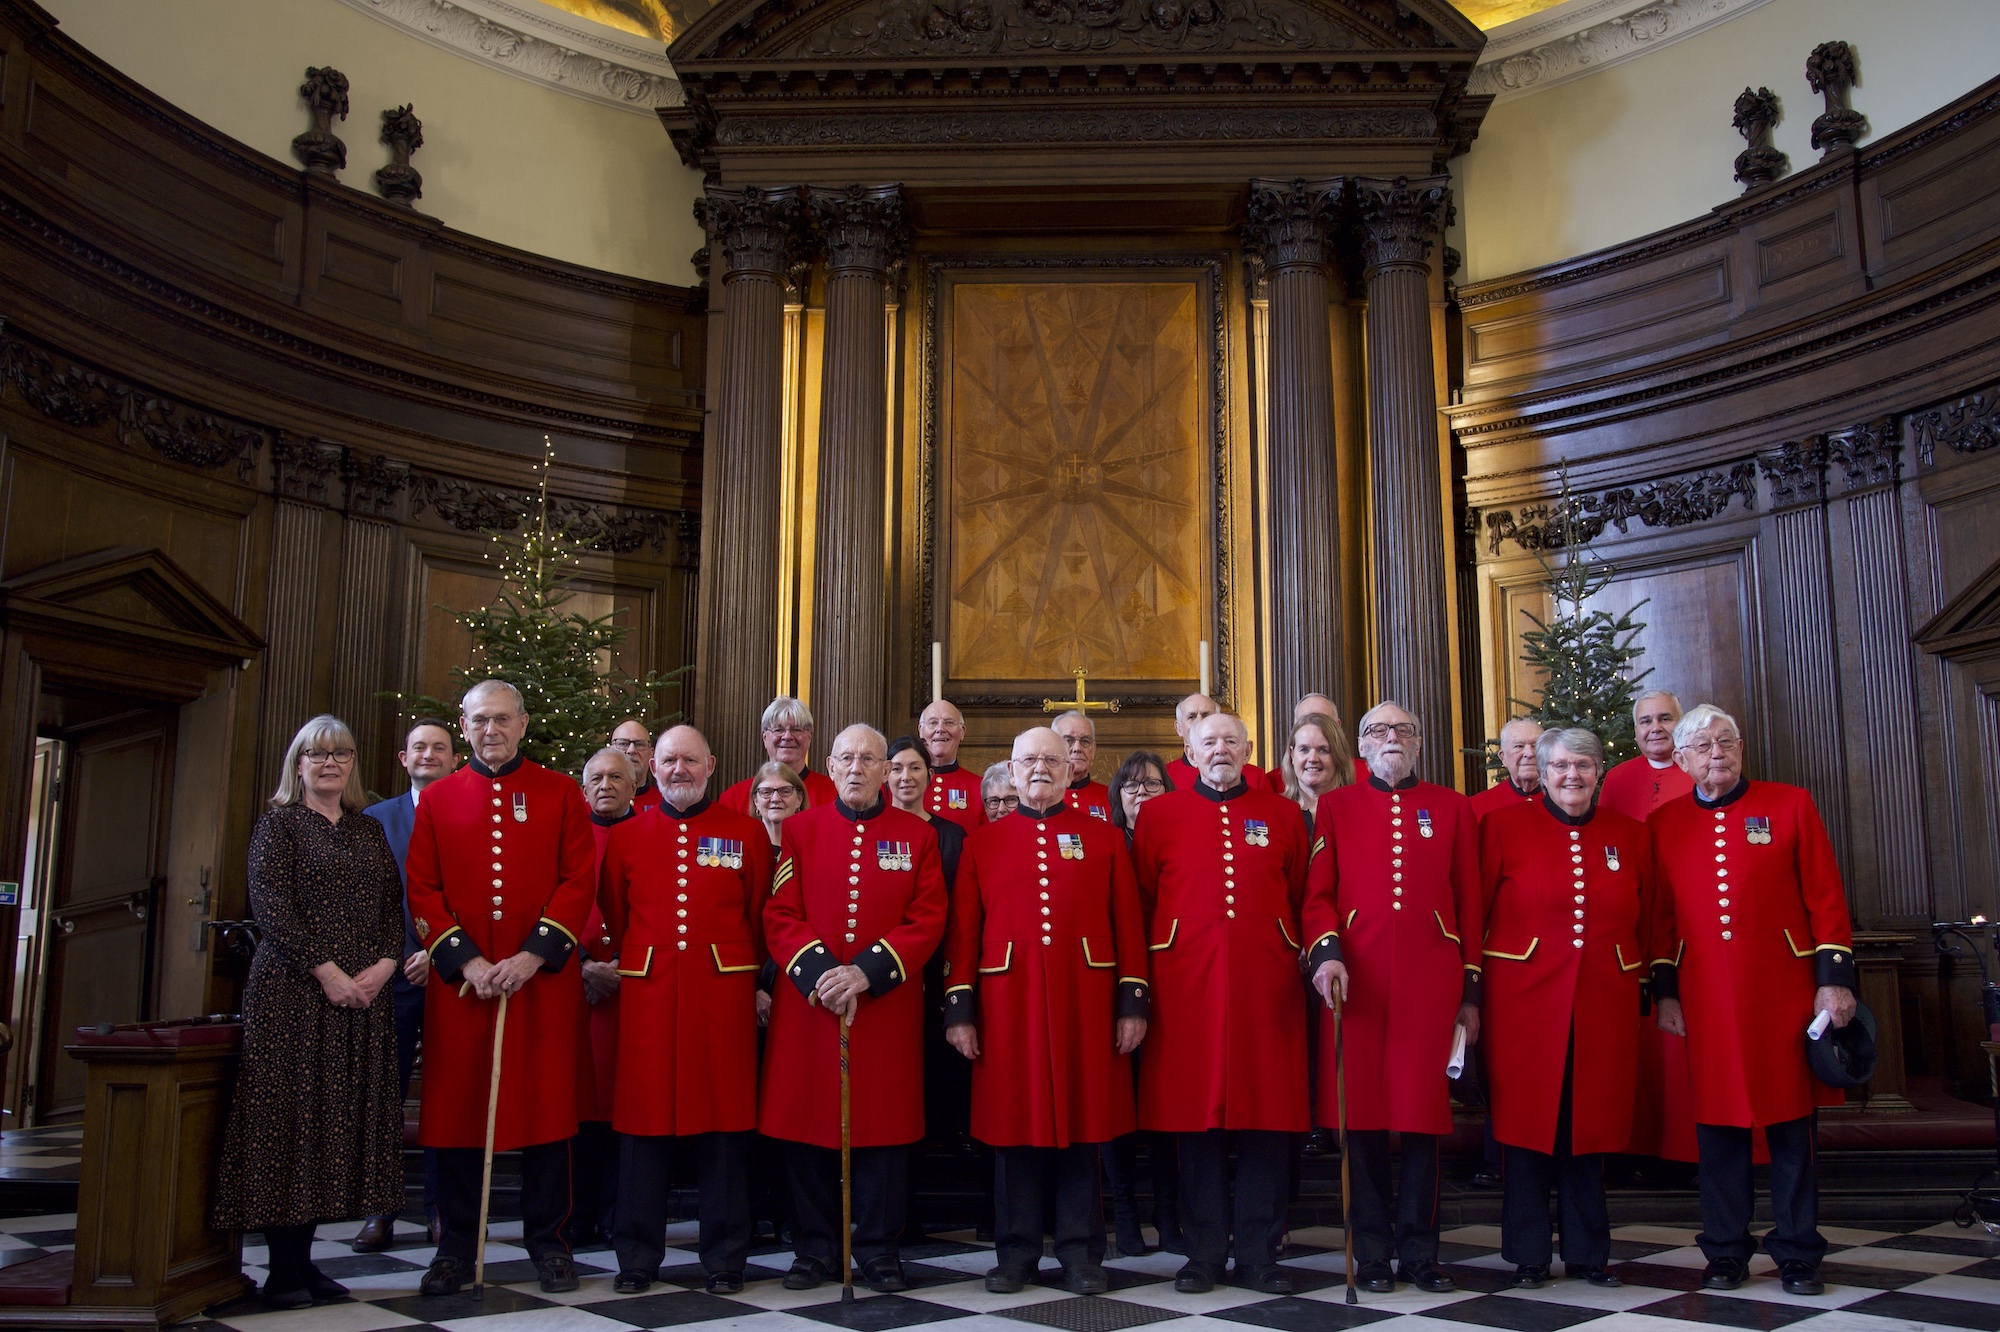 Chelsea Pensioner Singing Group in Scarlet uniform stood in the chapel